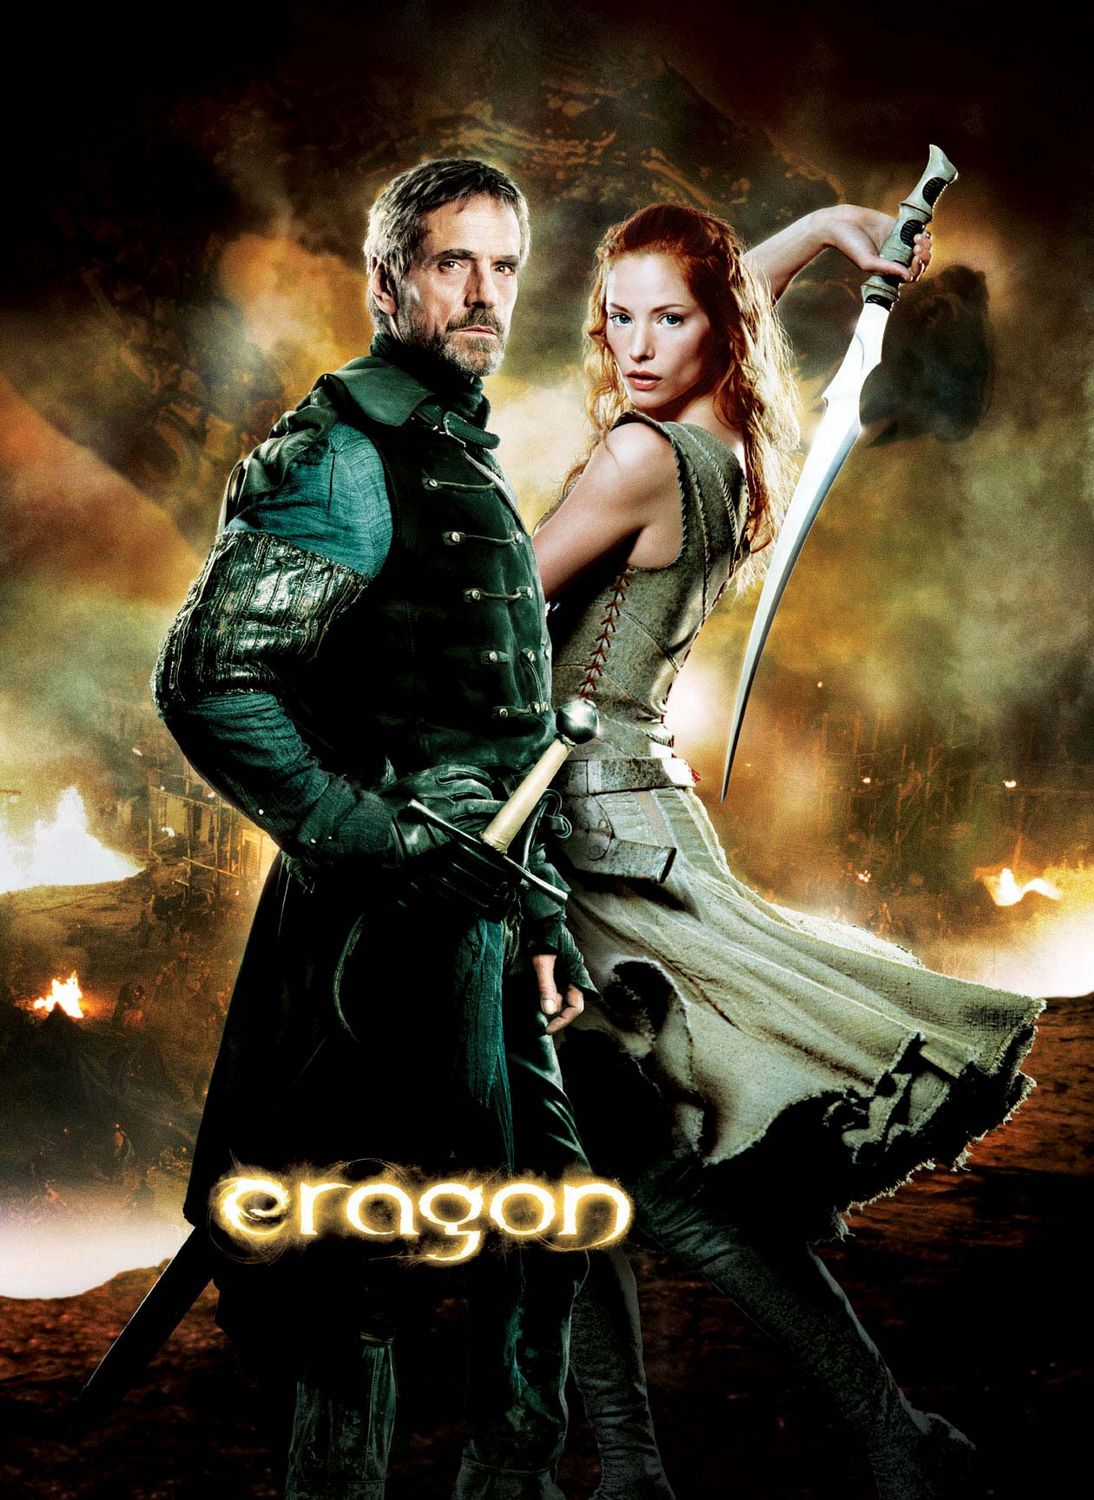 eragon movie for free online